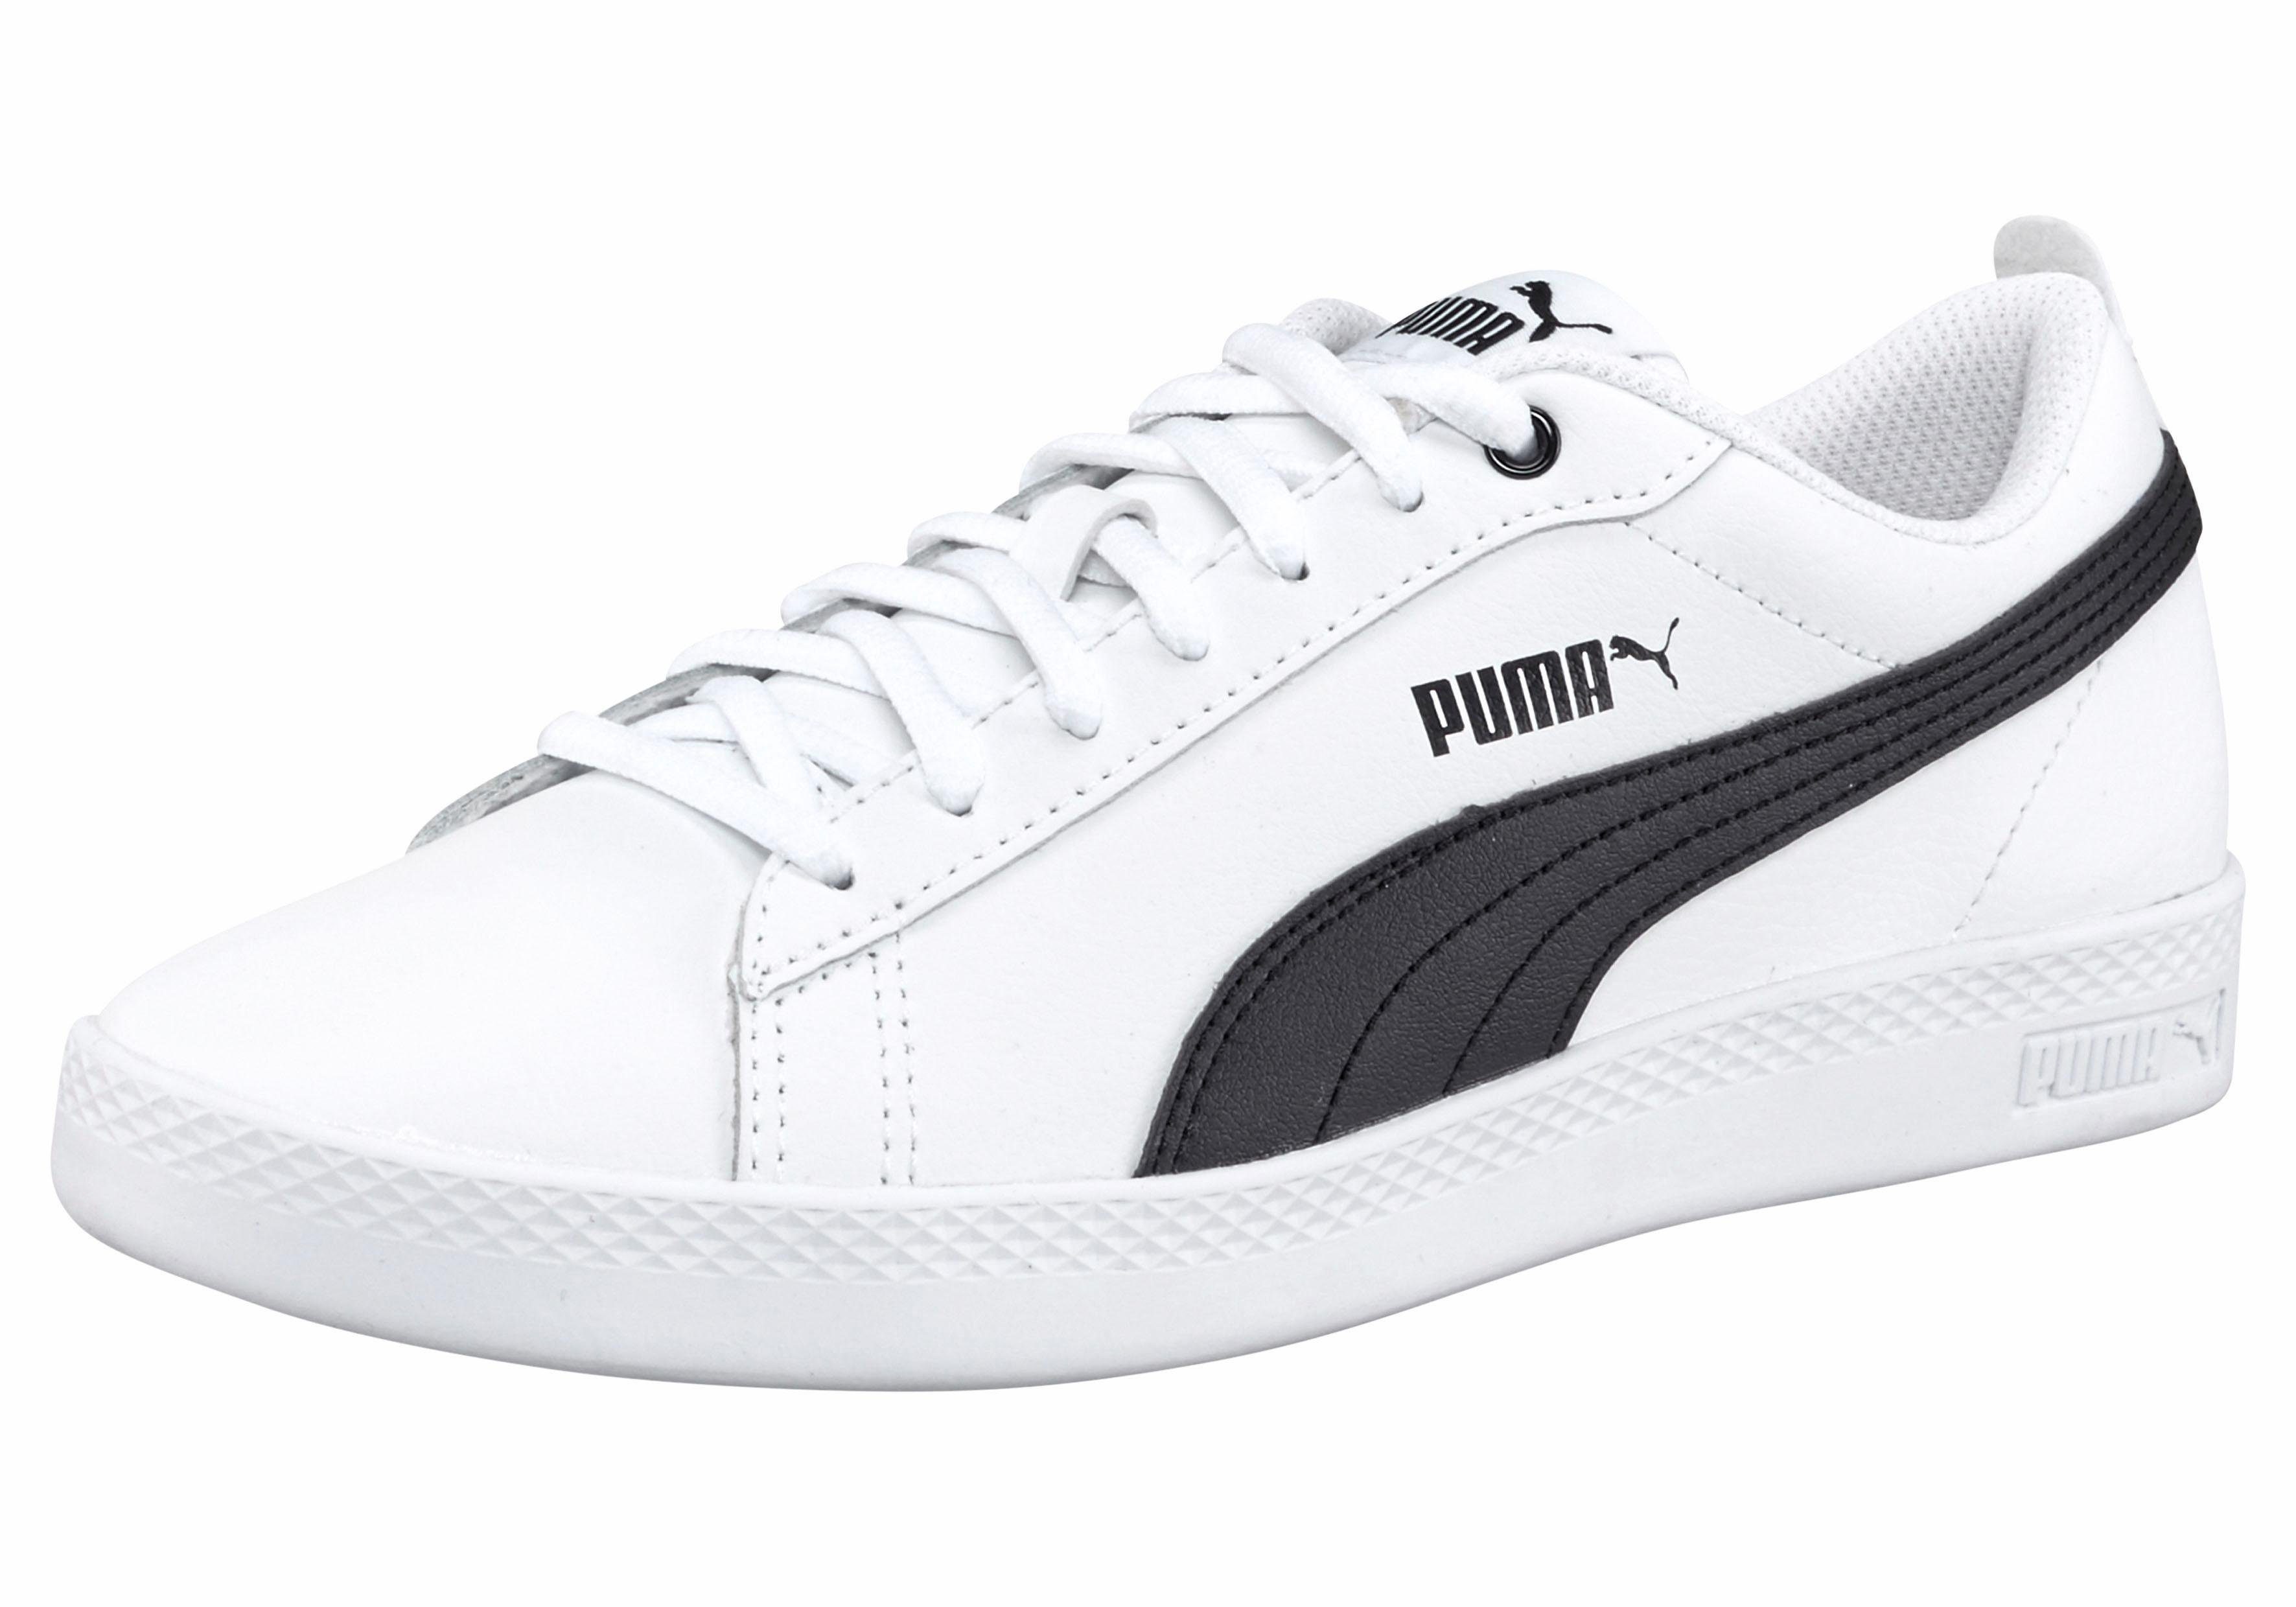 PUMA Smash Wns v2L Sneaker online kaufen | OTTO